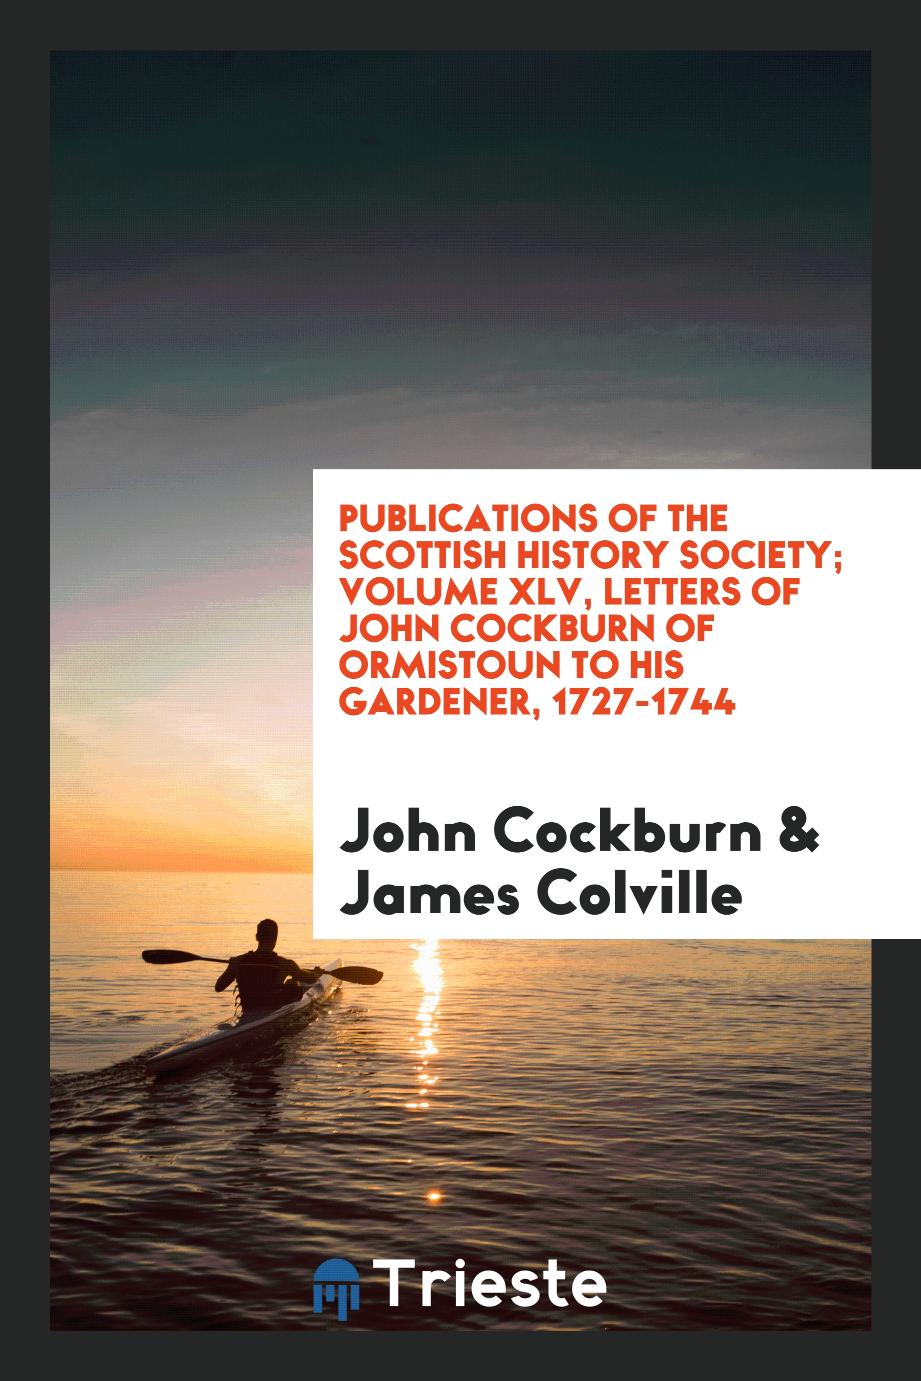 Publications of the Scottish History Society; Volume XLV, Letters of John Cockburn of Ormistoun to his gardener, 1727-1744